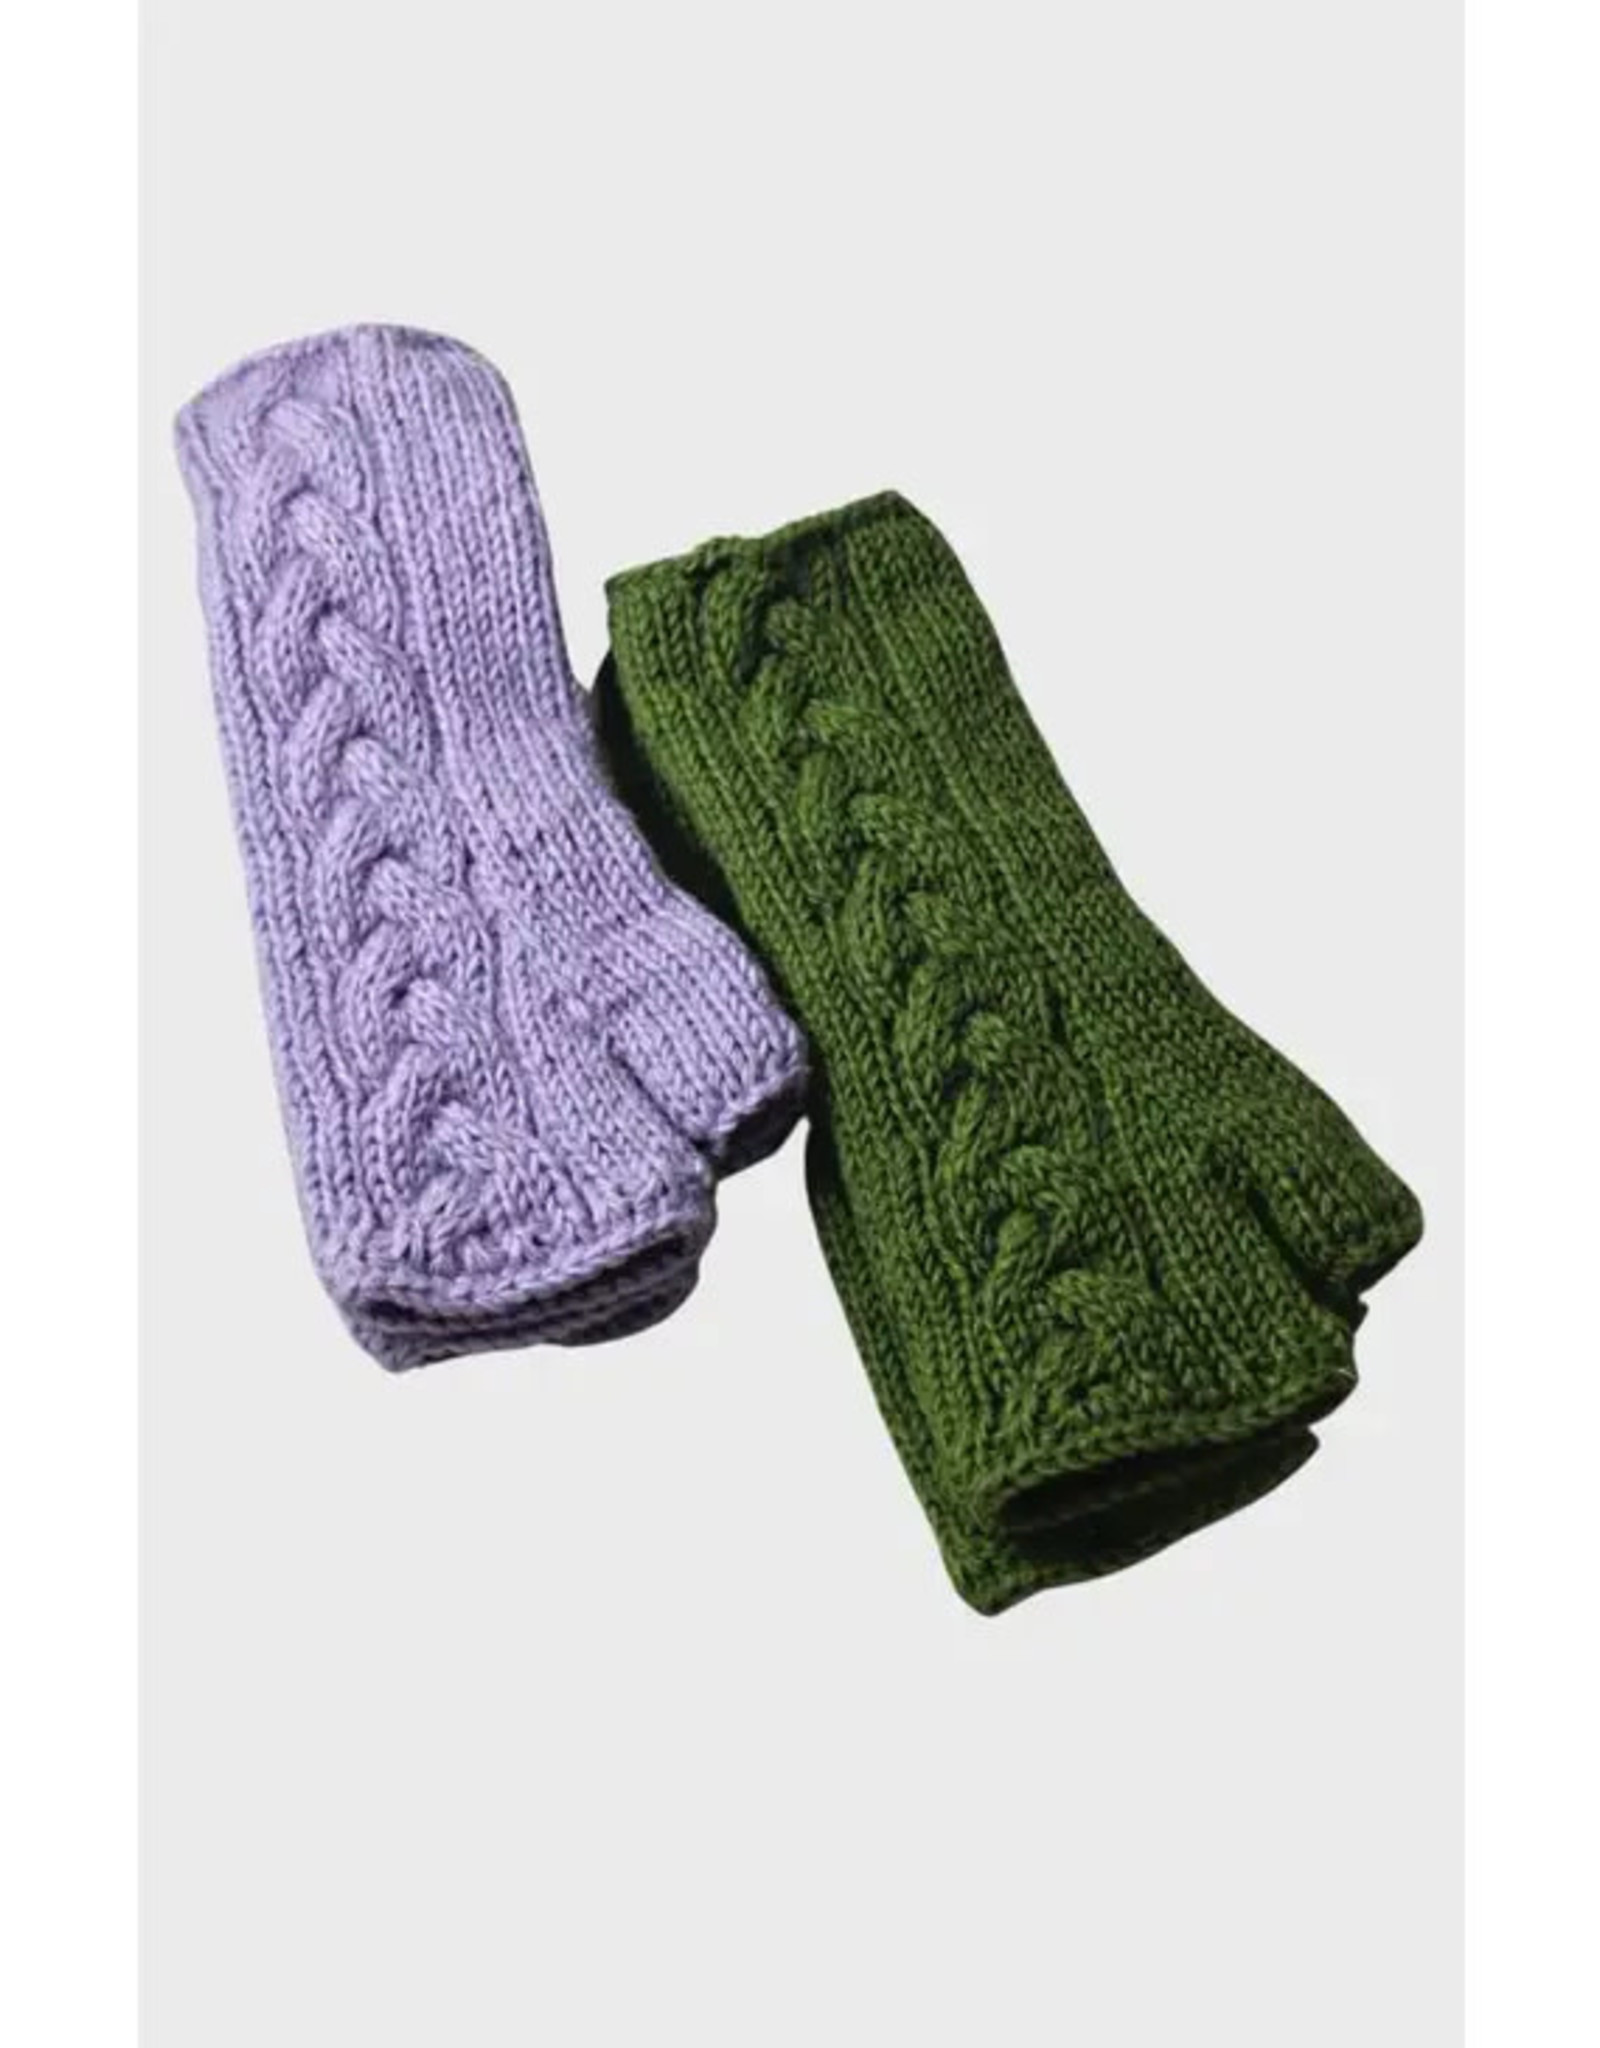 Ganesh Himal Long Wool Knit Fleece Lined Fingerless Gloves